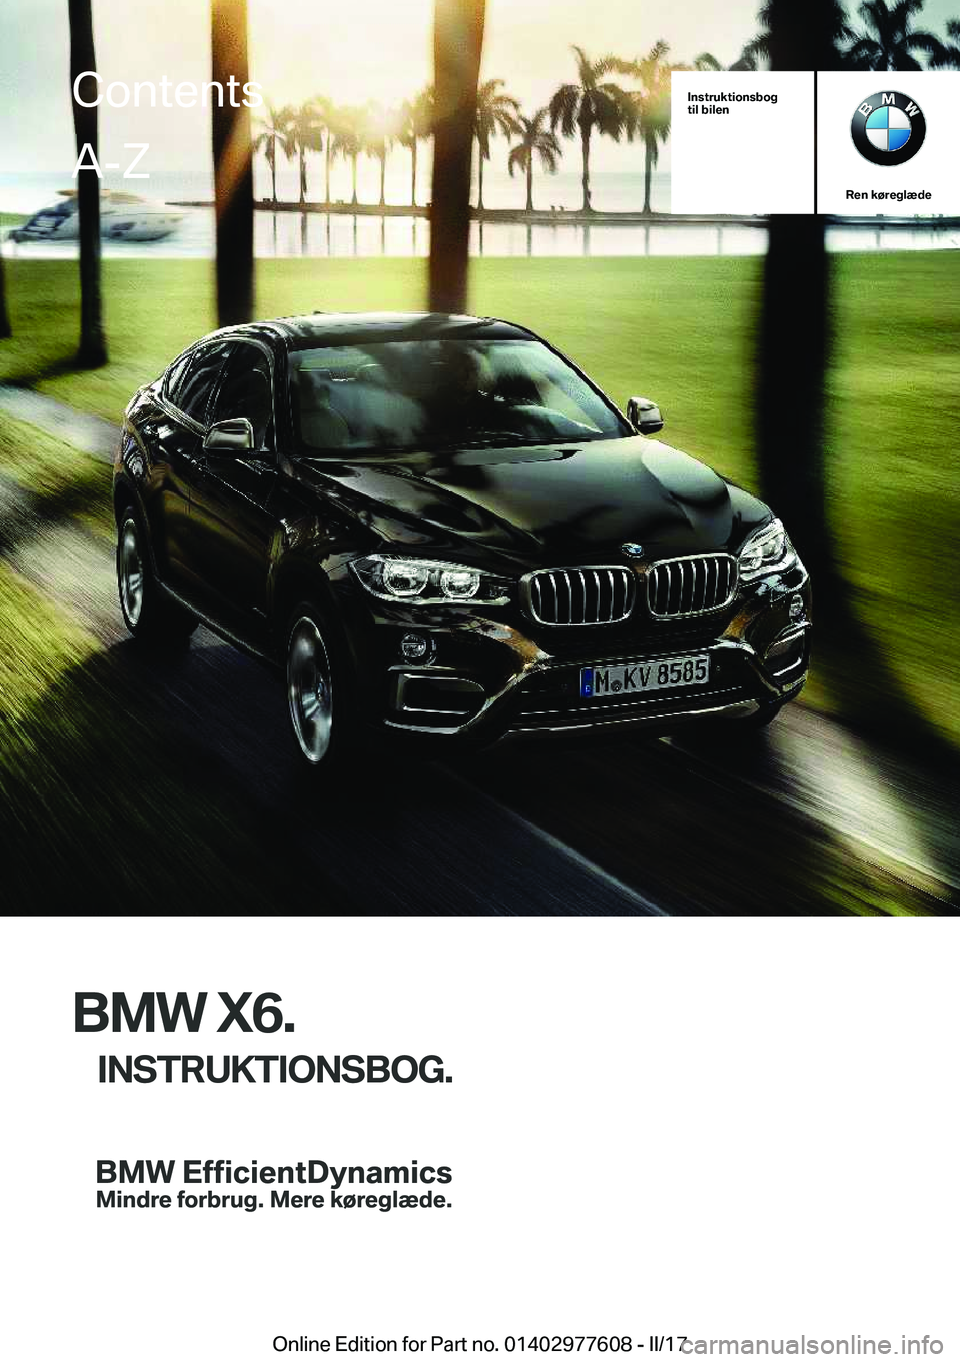 BMW X6 2017  InstruktionsbØger (in Danish) �I�n�s�t�r�u�k�t�i�o�n�s�b�o�g
�t�i�l��b�i�l�e�n
�R�e�n��k�